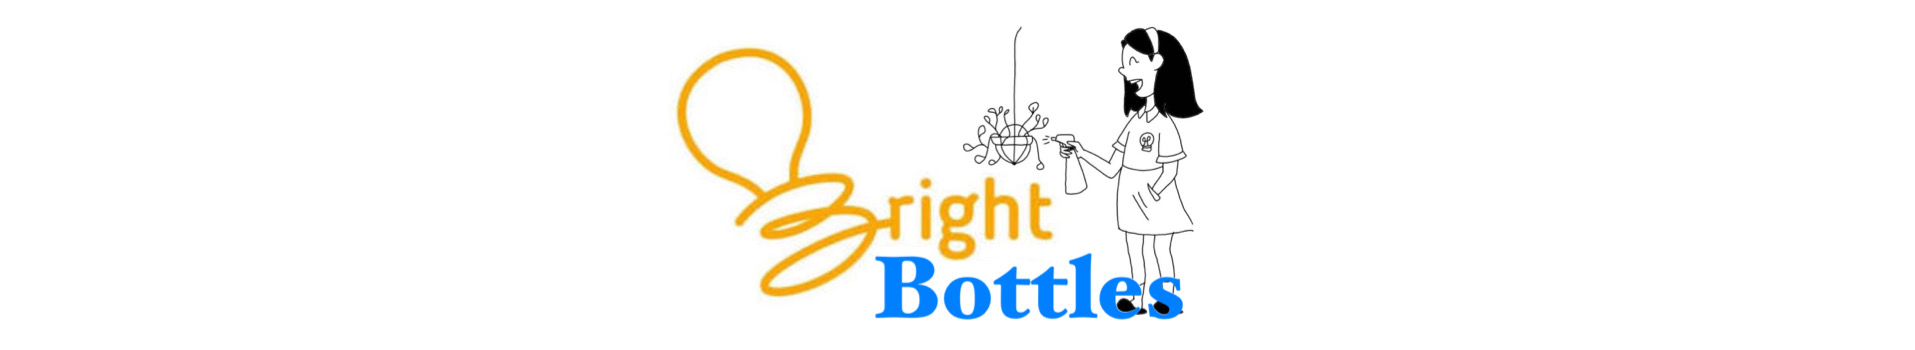 Bright Bottles